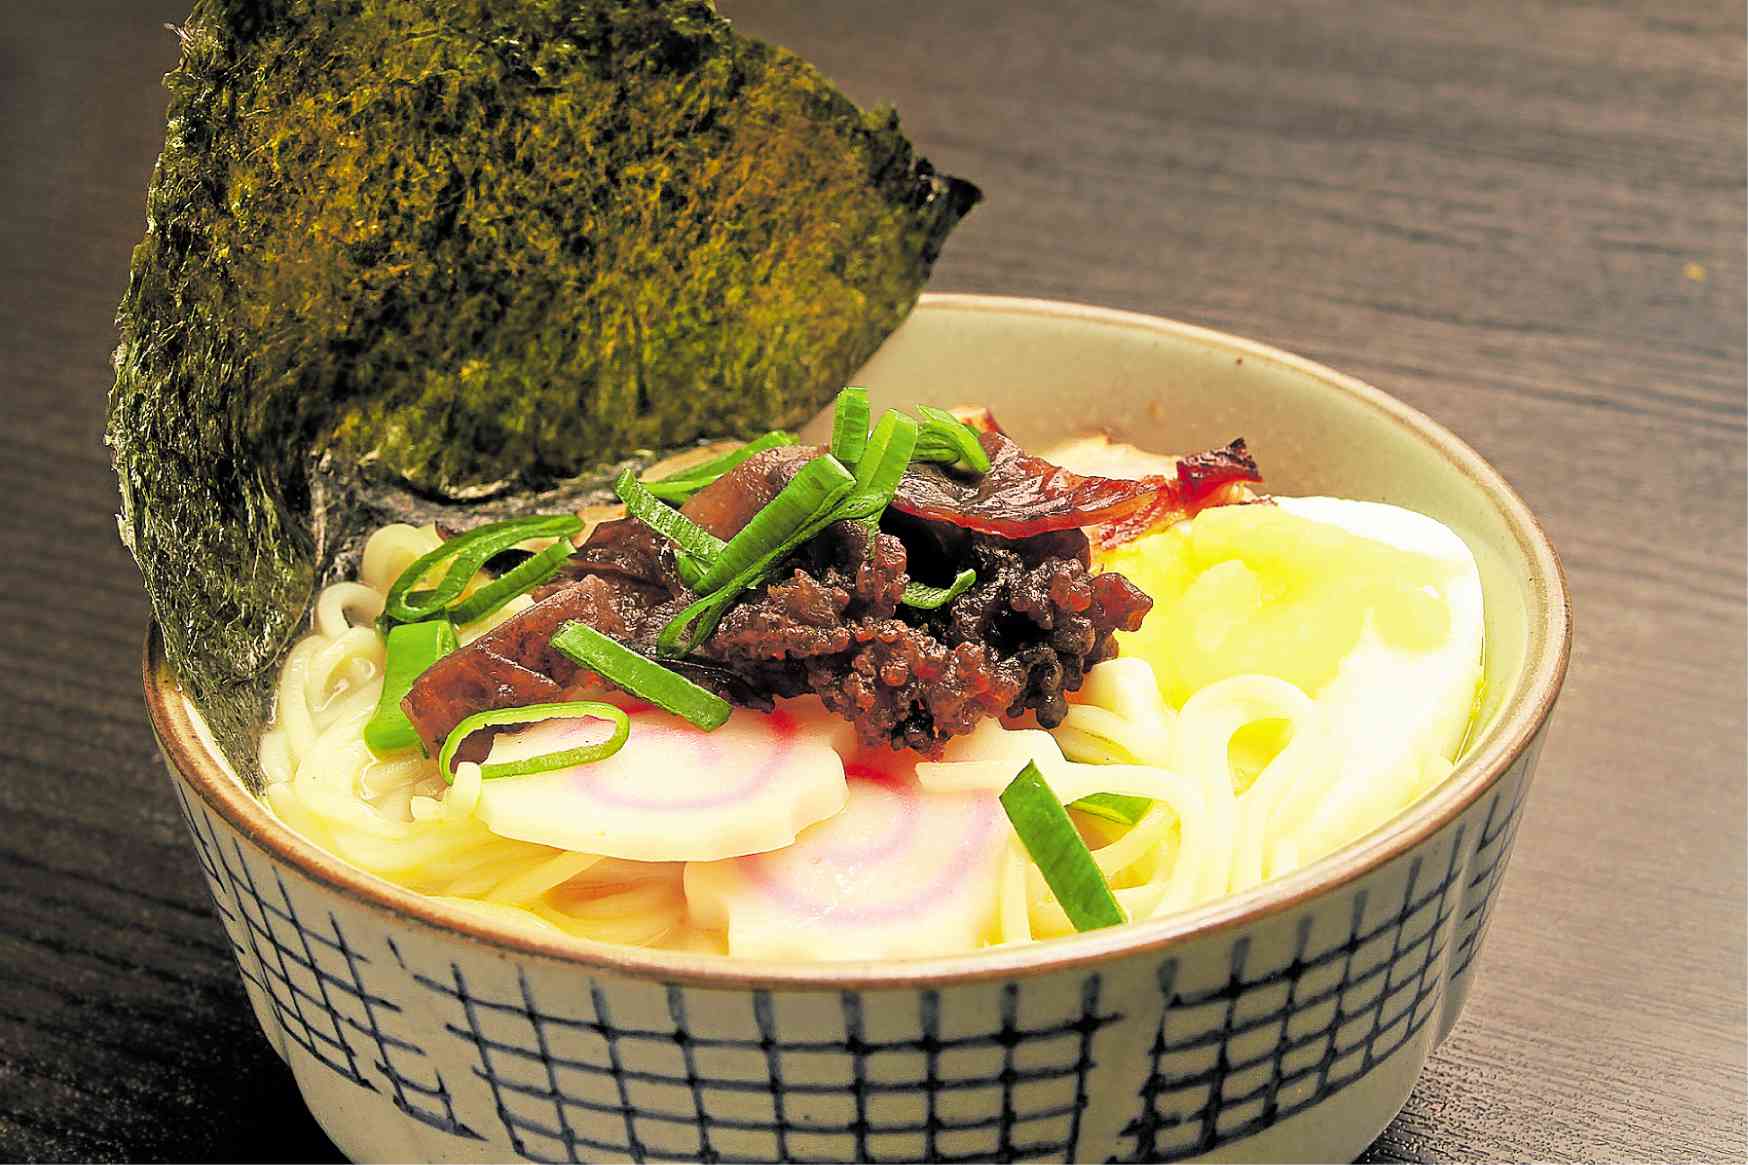 Ogetsu ramen noodles are made fresh daily.